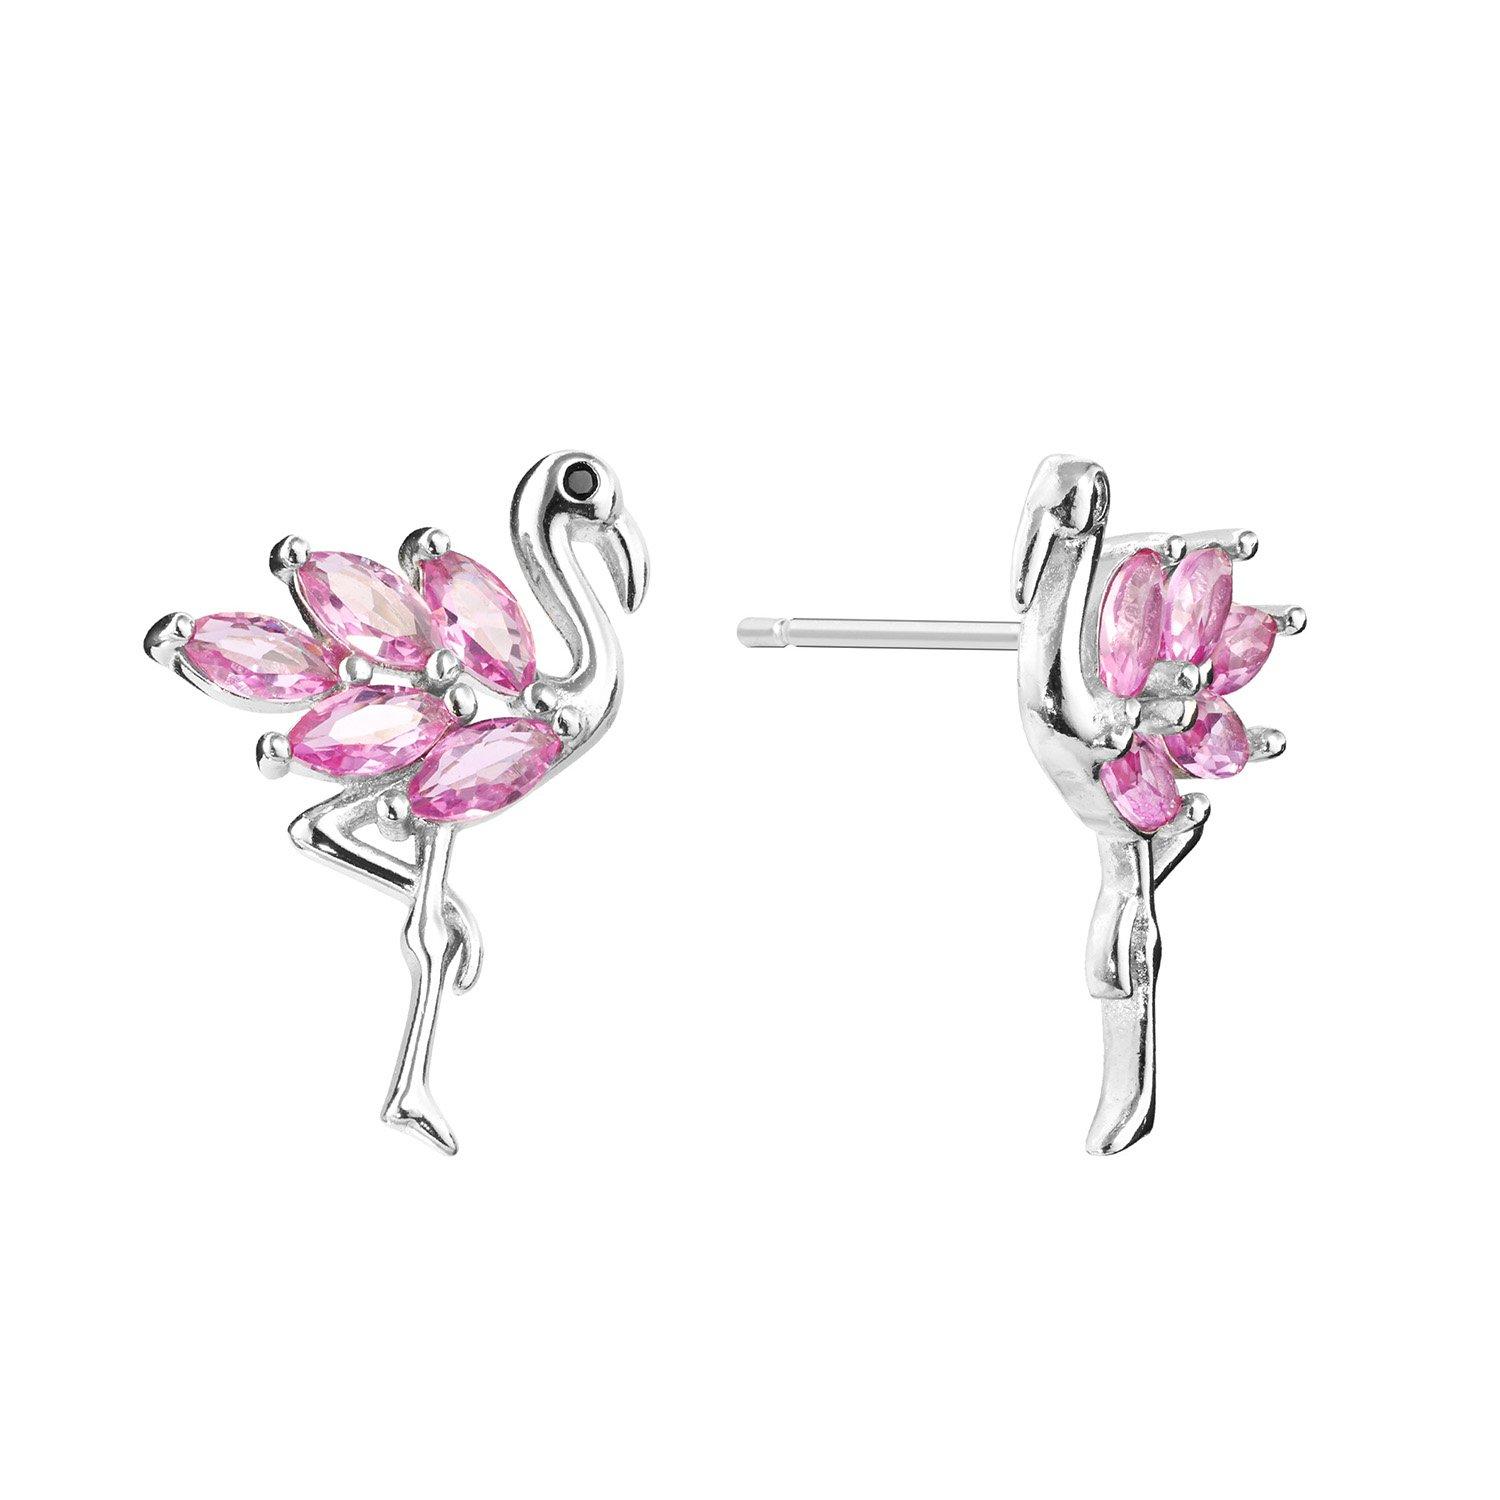 Piper & Taylor Rhinestone Flamingo Stud Earrings